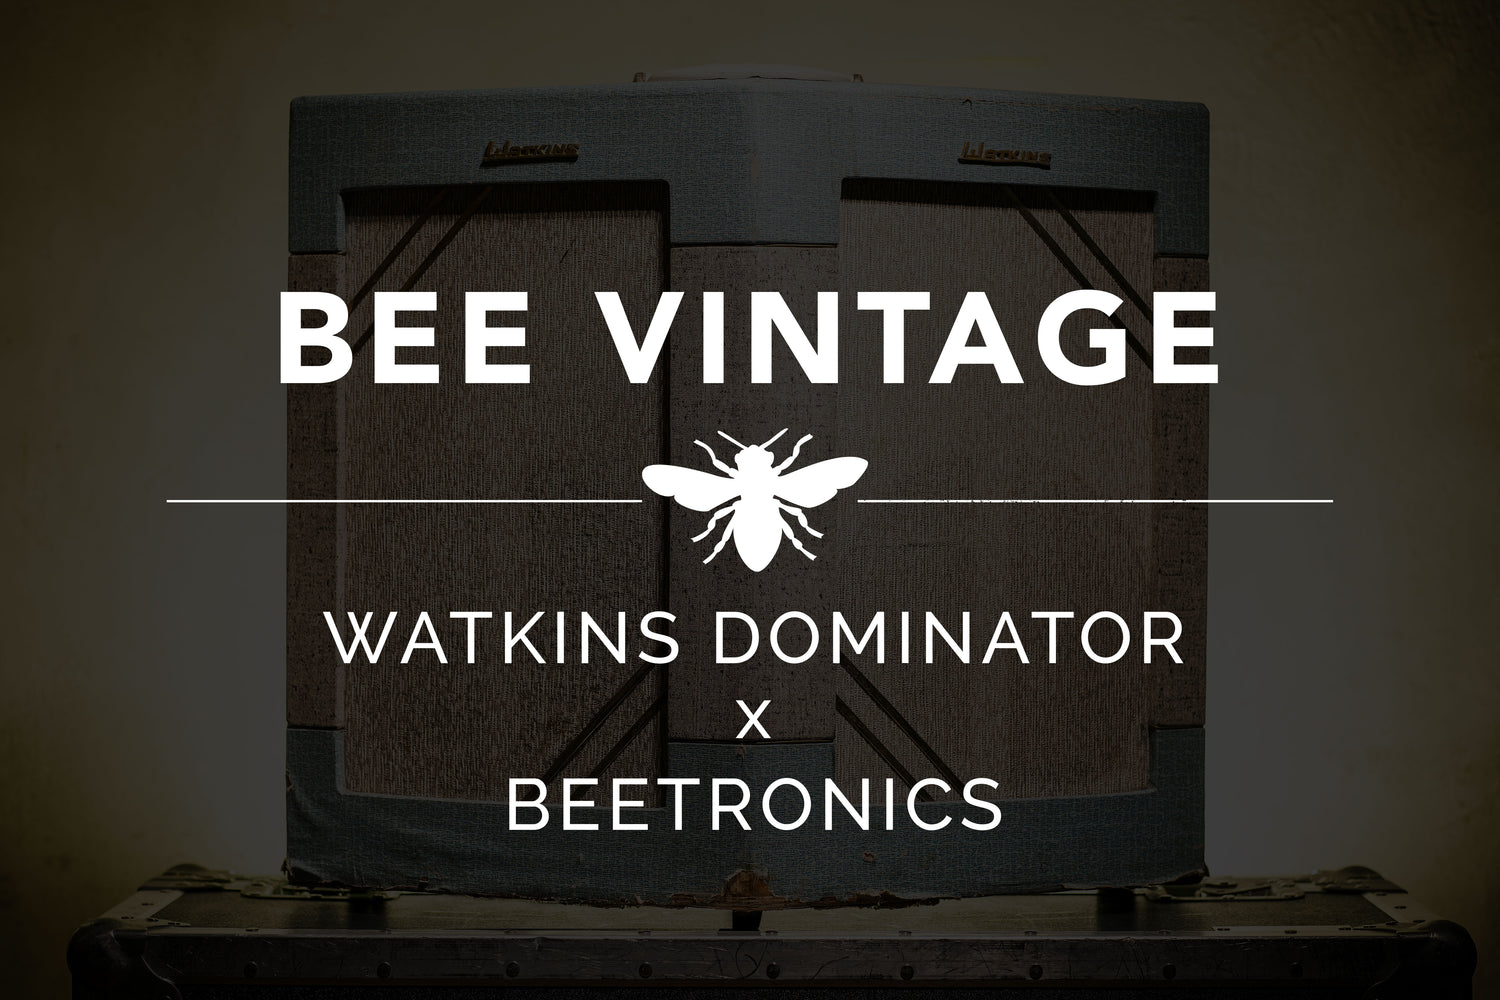 BEE VINTAGE - Watkins Dominator X Beetronics